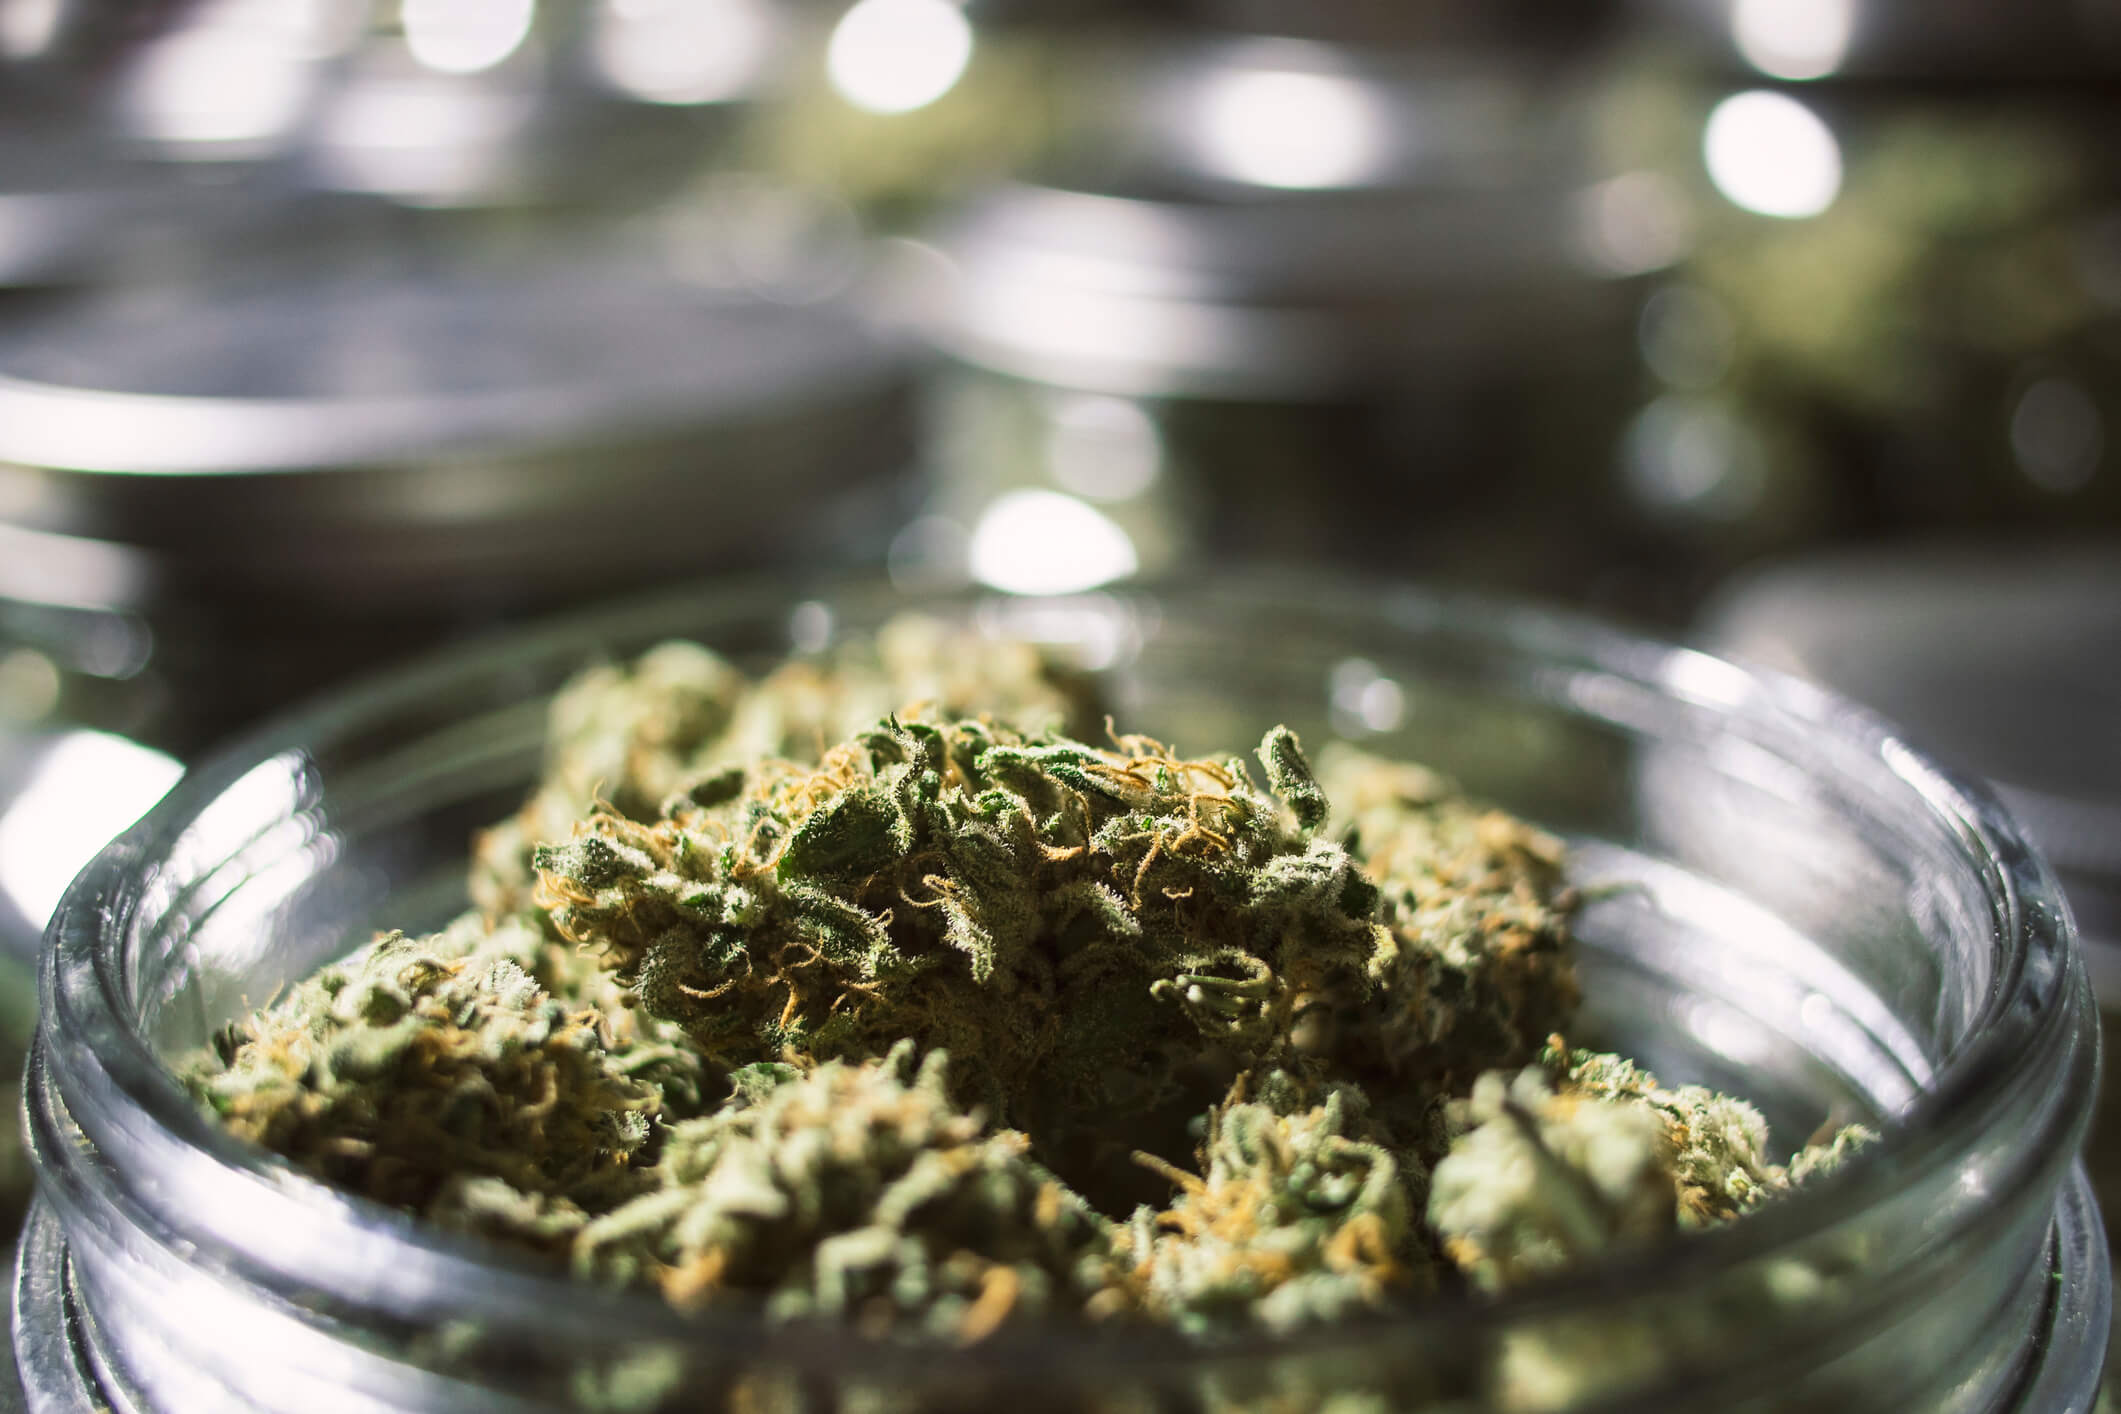 Marijuana buds in a jar